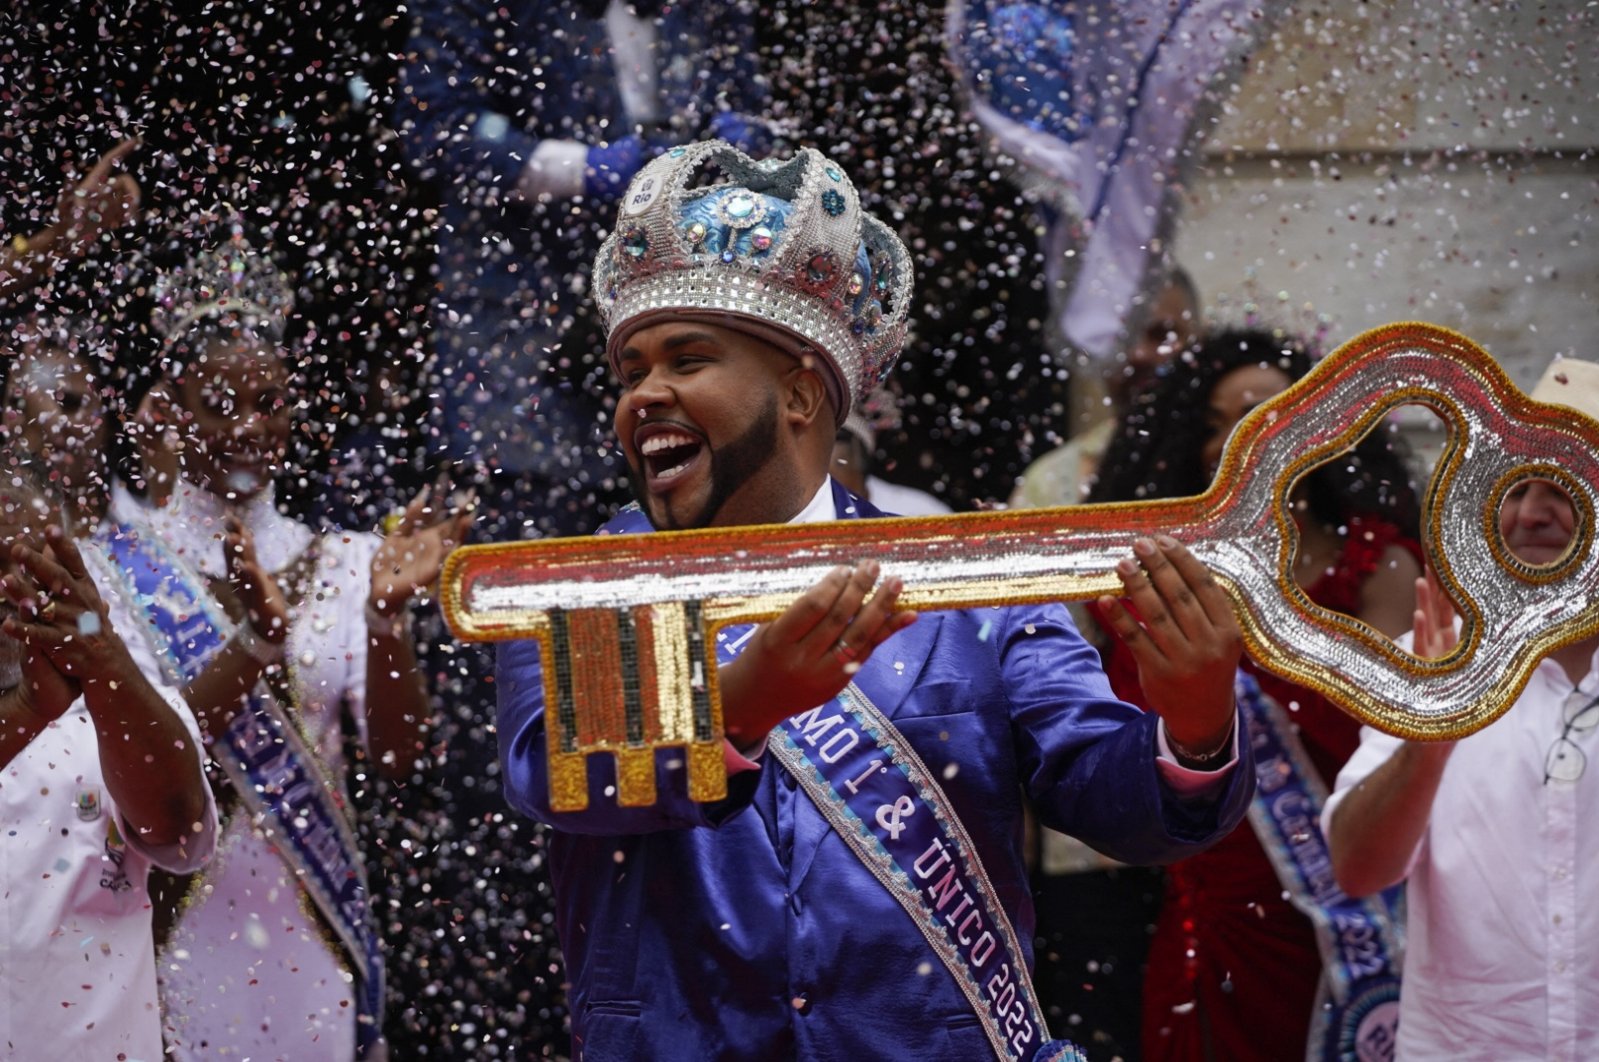 King Momo (the symbol of carnival) Wilson Dias da Costa Neto holds the keys to the city of Rio during the official opening ceremony, Rio de Janeiro, Brazil, April 20, 2022. (EPA Photo)